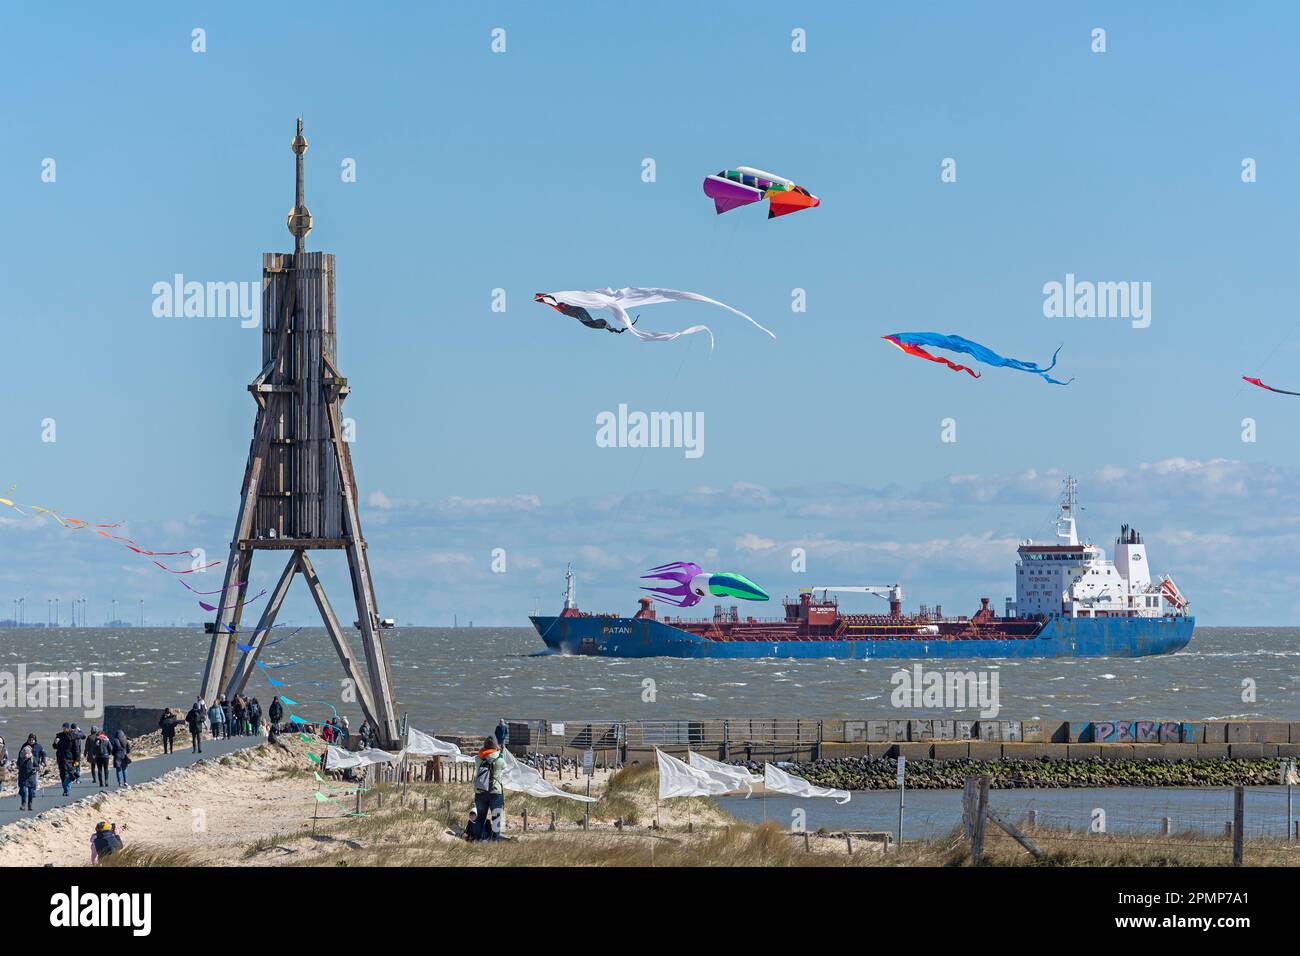 Menschen, fliegende Drachen, Frachtschiff, Seemarker Kugelbake, Nordsee, Elbe, Cuxhaven, Niedersachsen, Deutschland Stockfoto